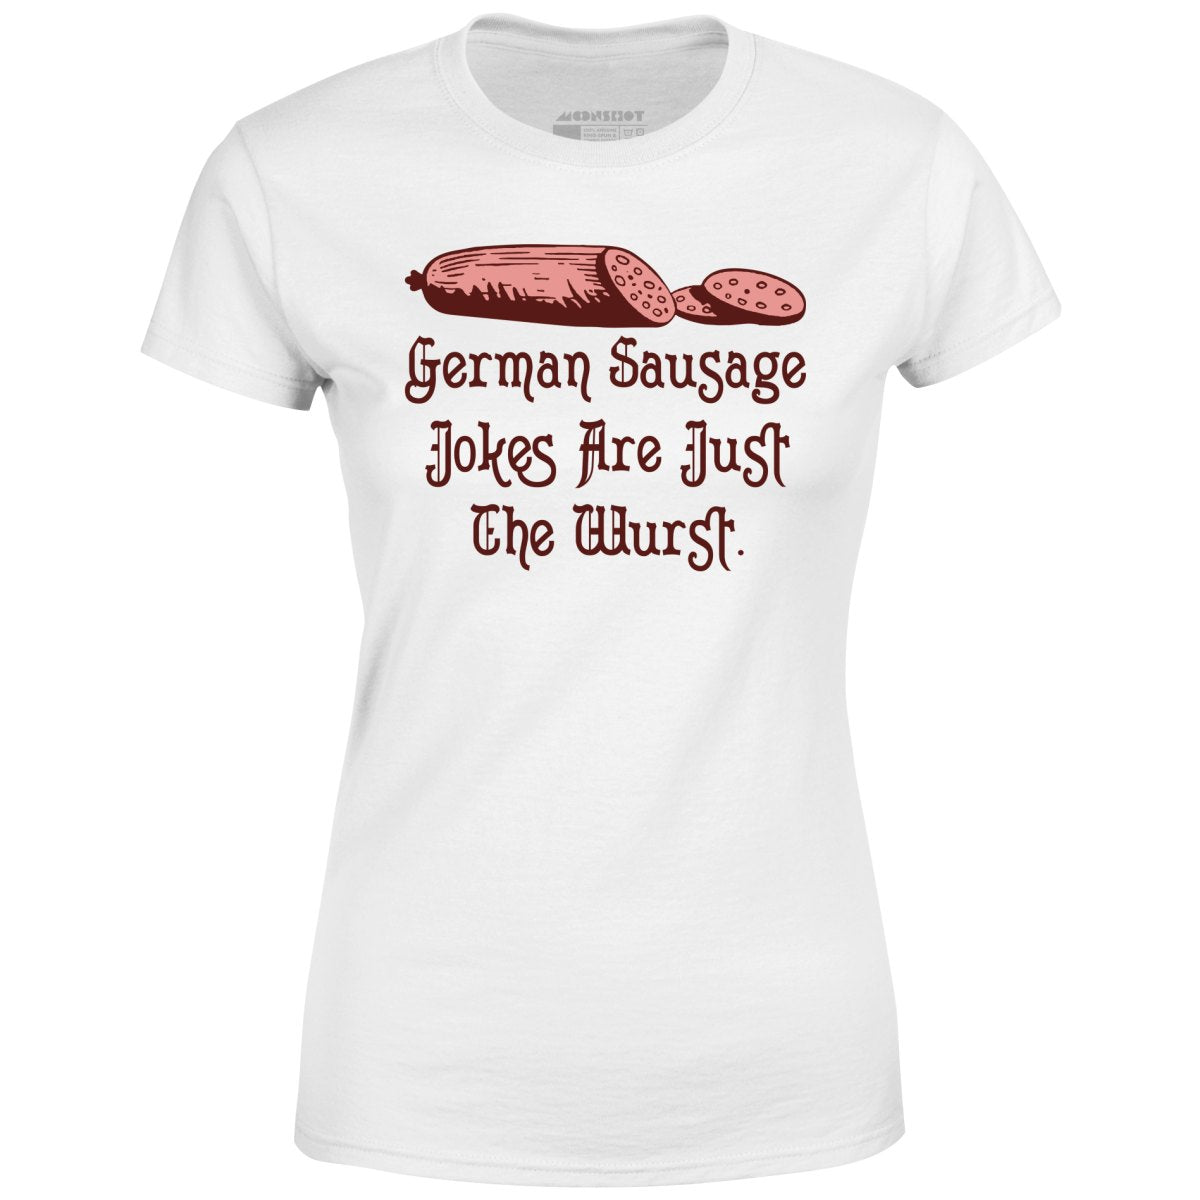 German Sausage Jokes Are Just The Wurst - Women's T-Shirt